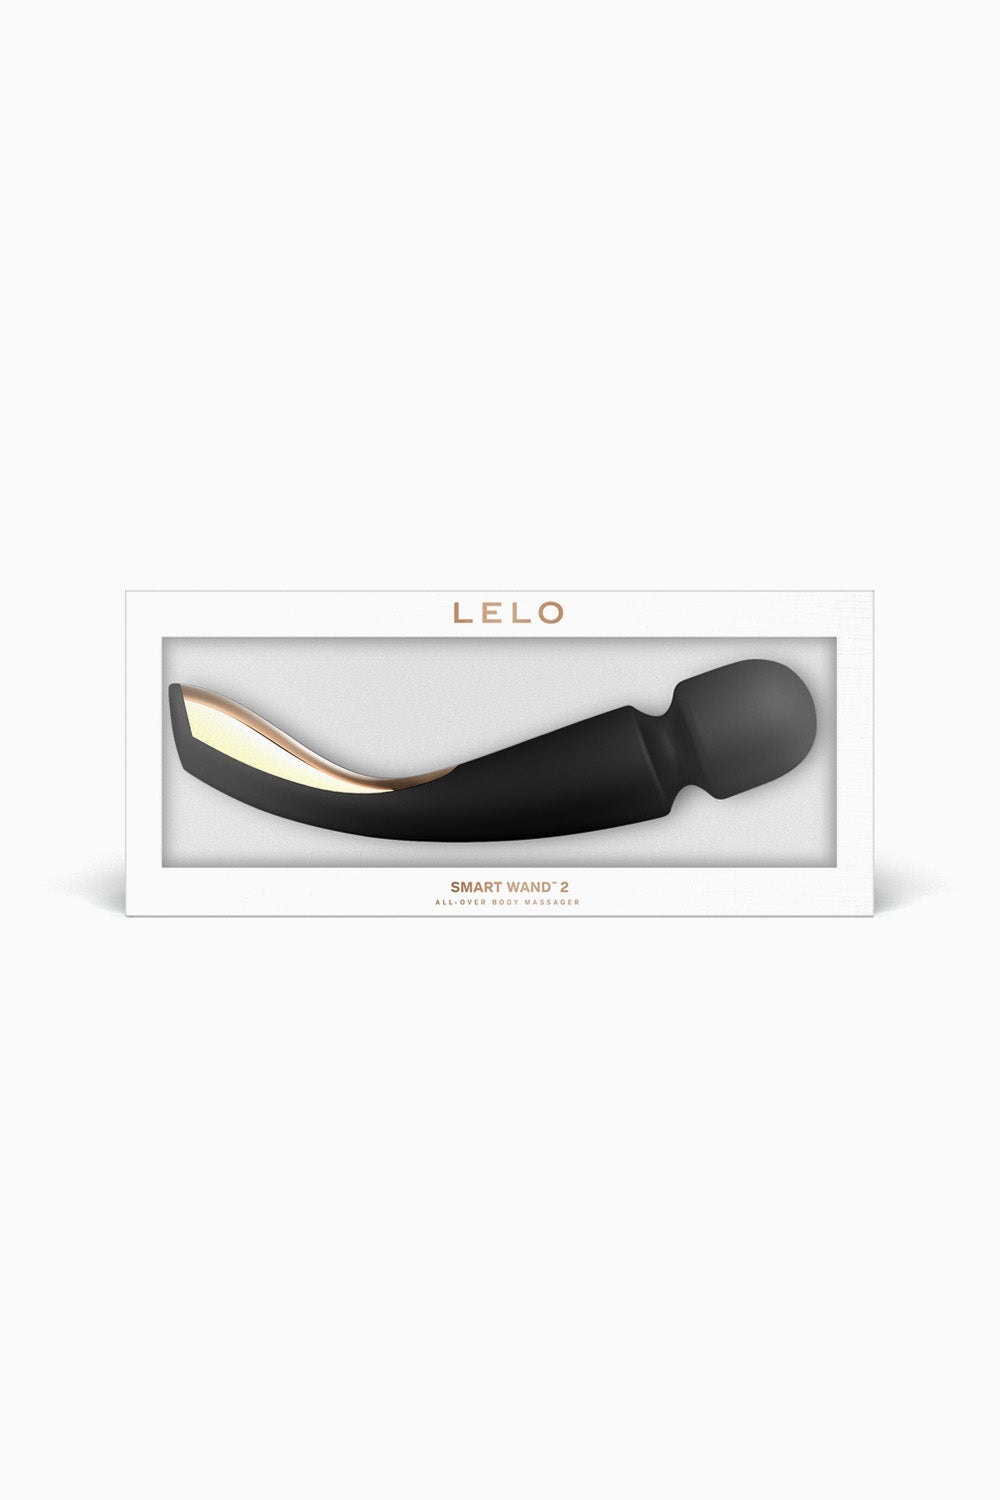 Lelo Smart Wand 2 Vibrator Massager - Black, 11.5 Inches